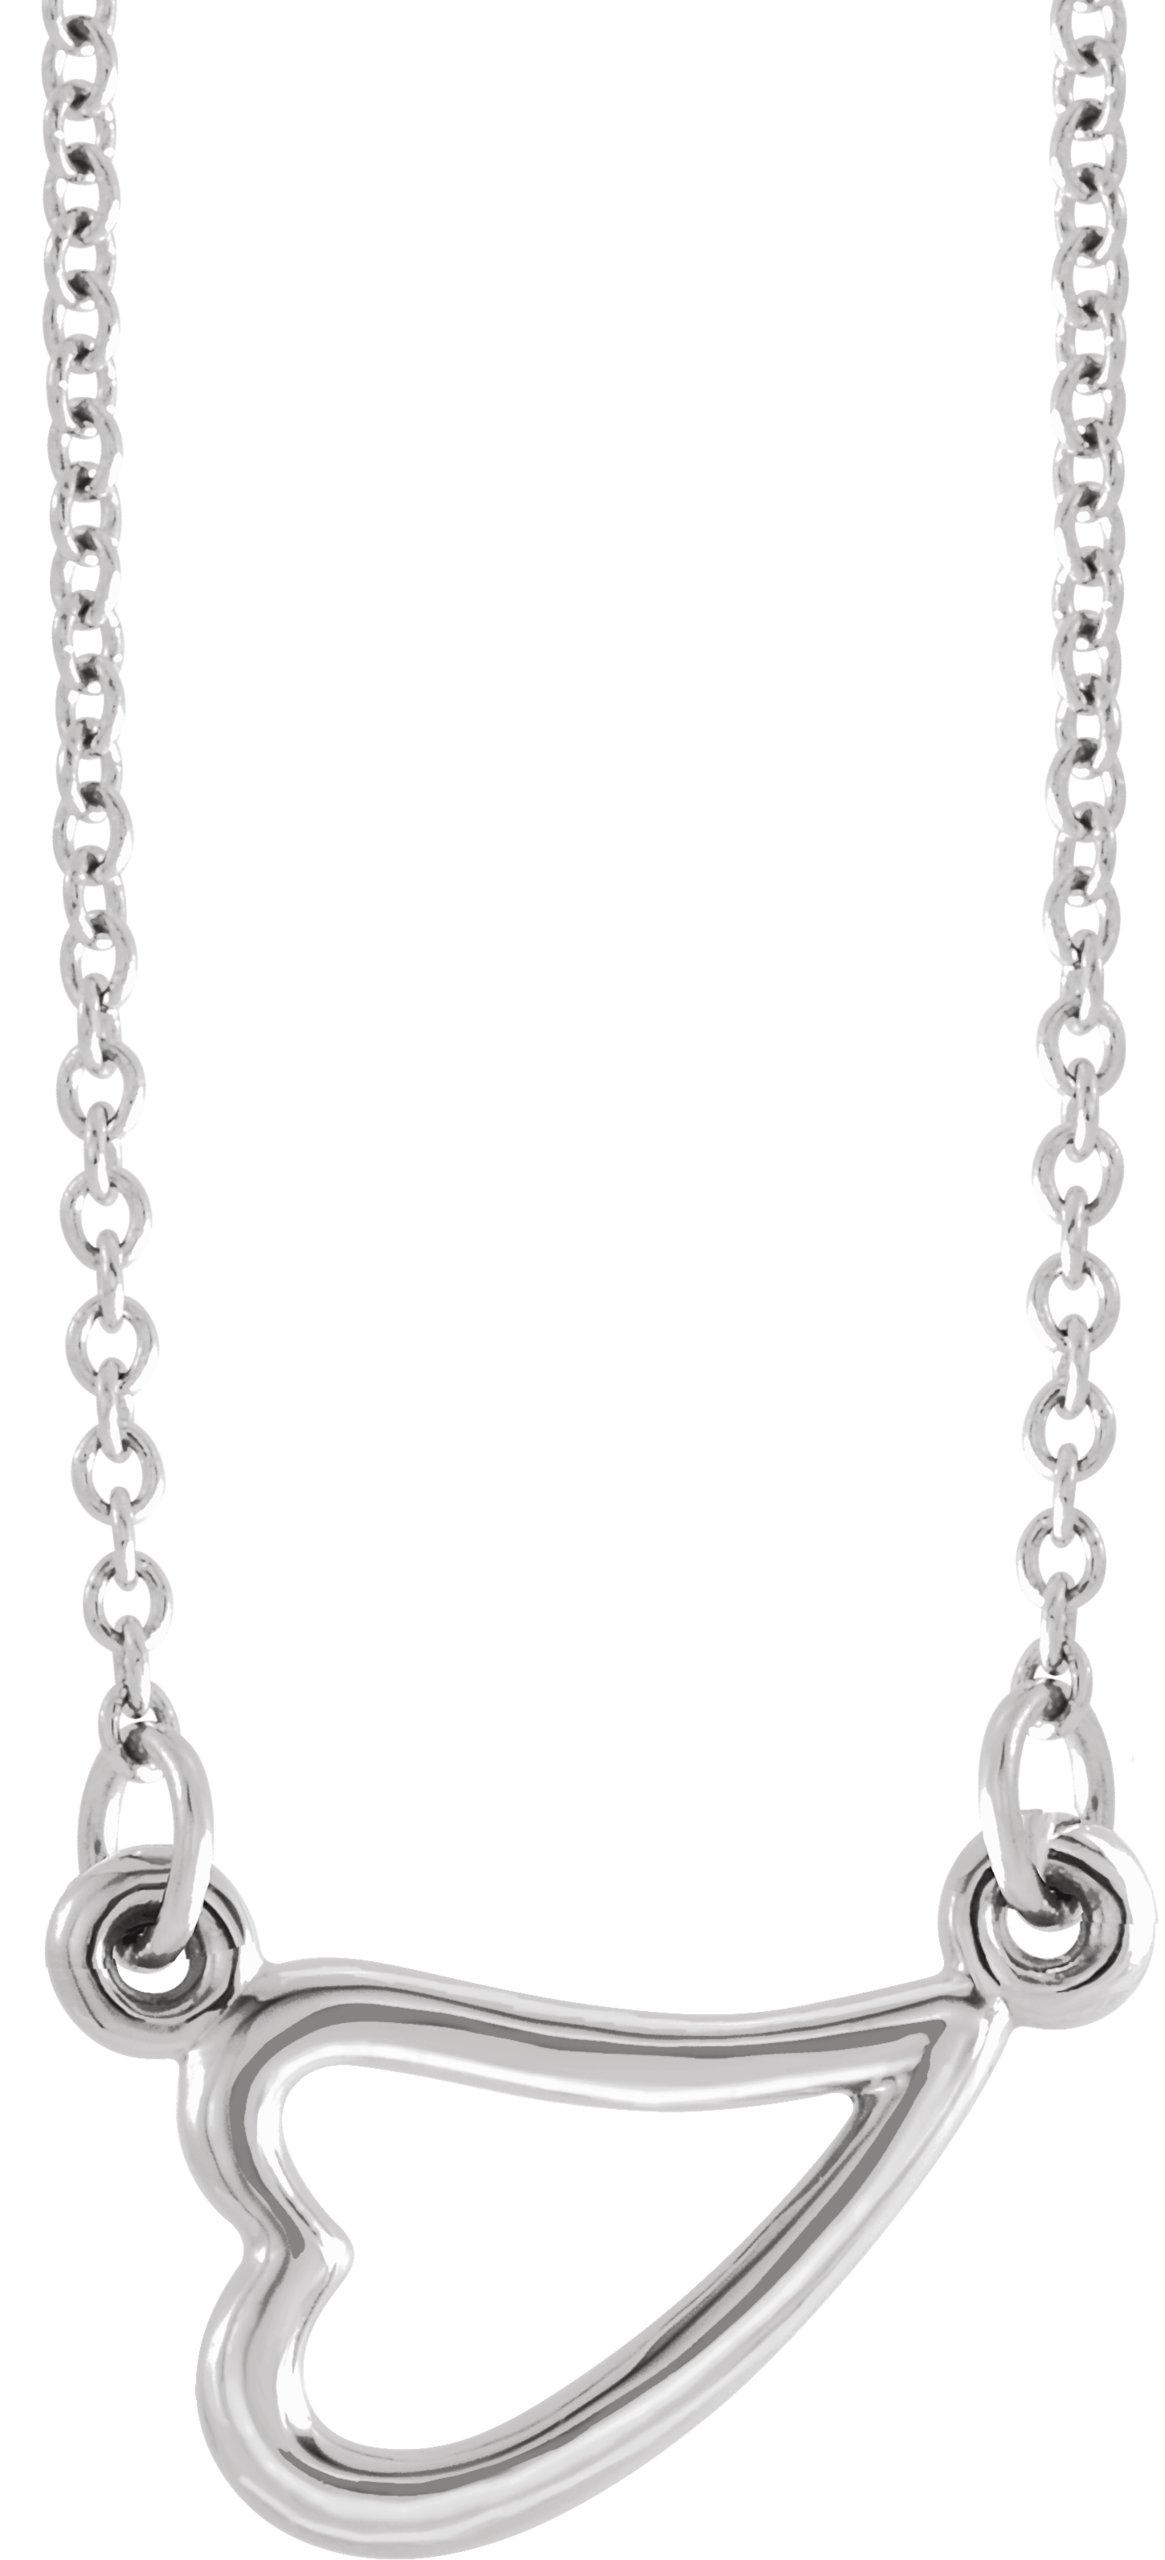 Sterling Silver Adjustable Heart 16-18" Necklace